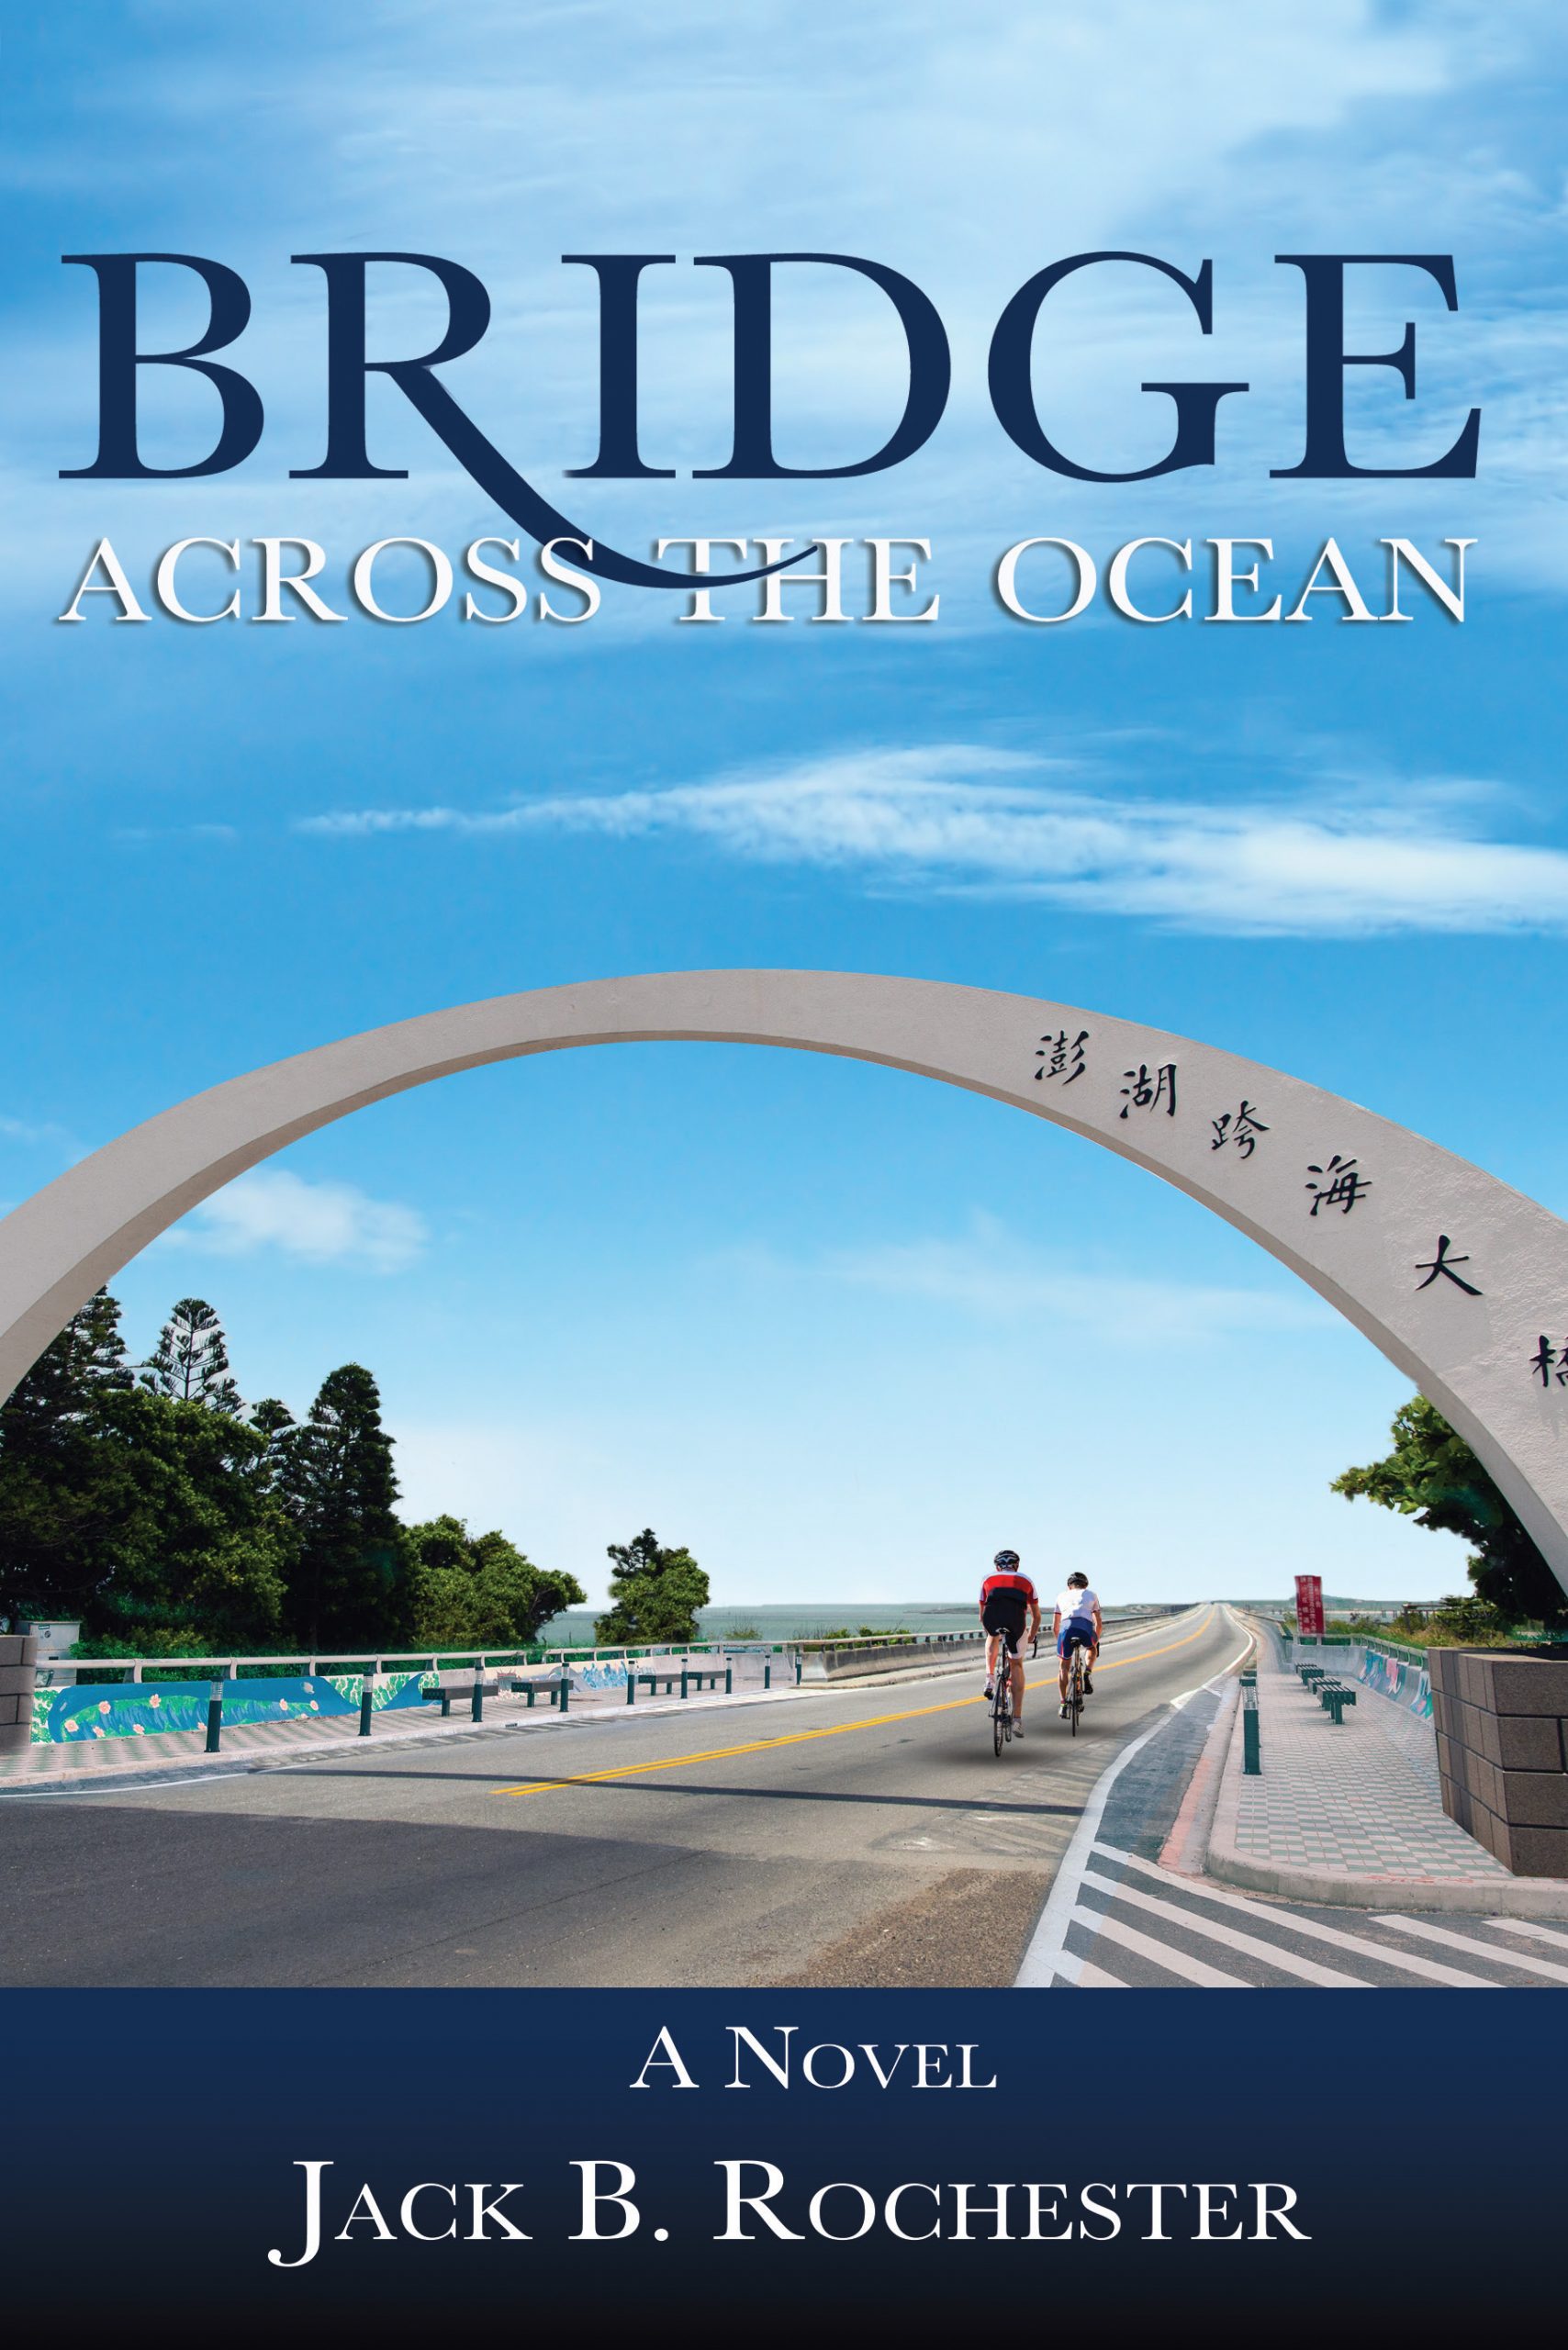 Bridge Across The Ocean PB Cover Final.indd